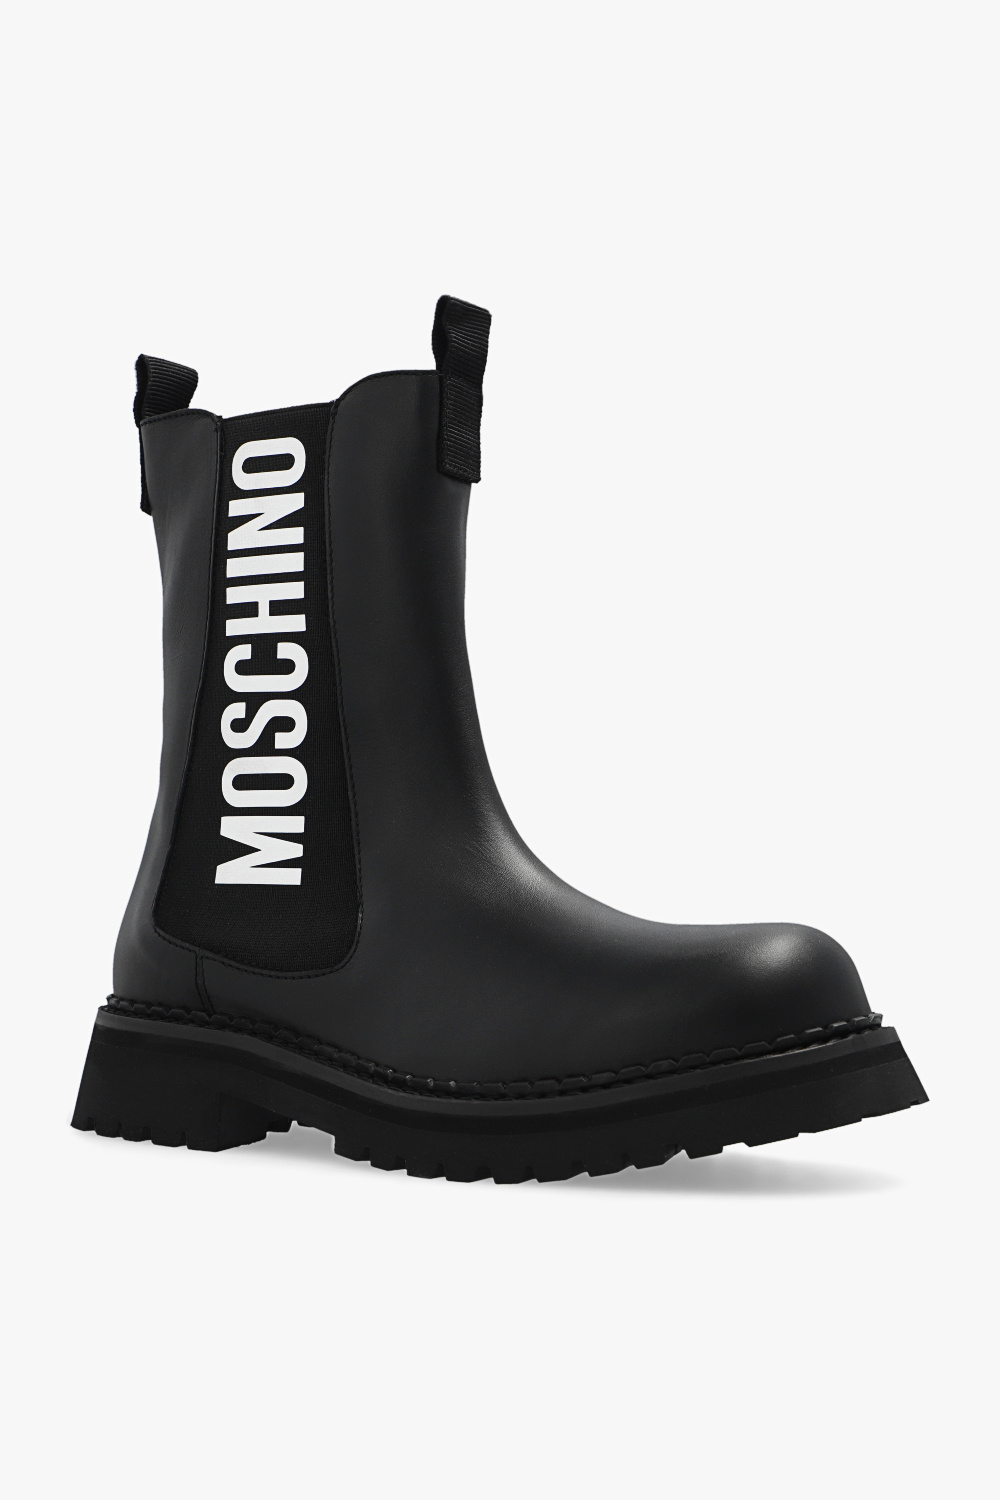 Moschino tommy hilfiger rtw fall 2016 new york fashion week shoes